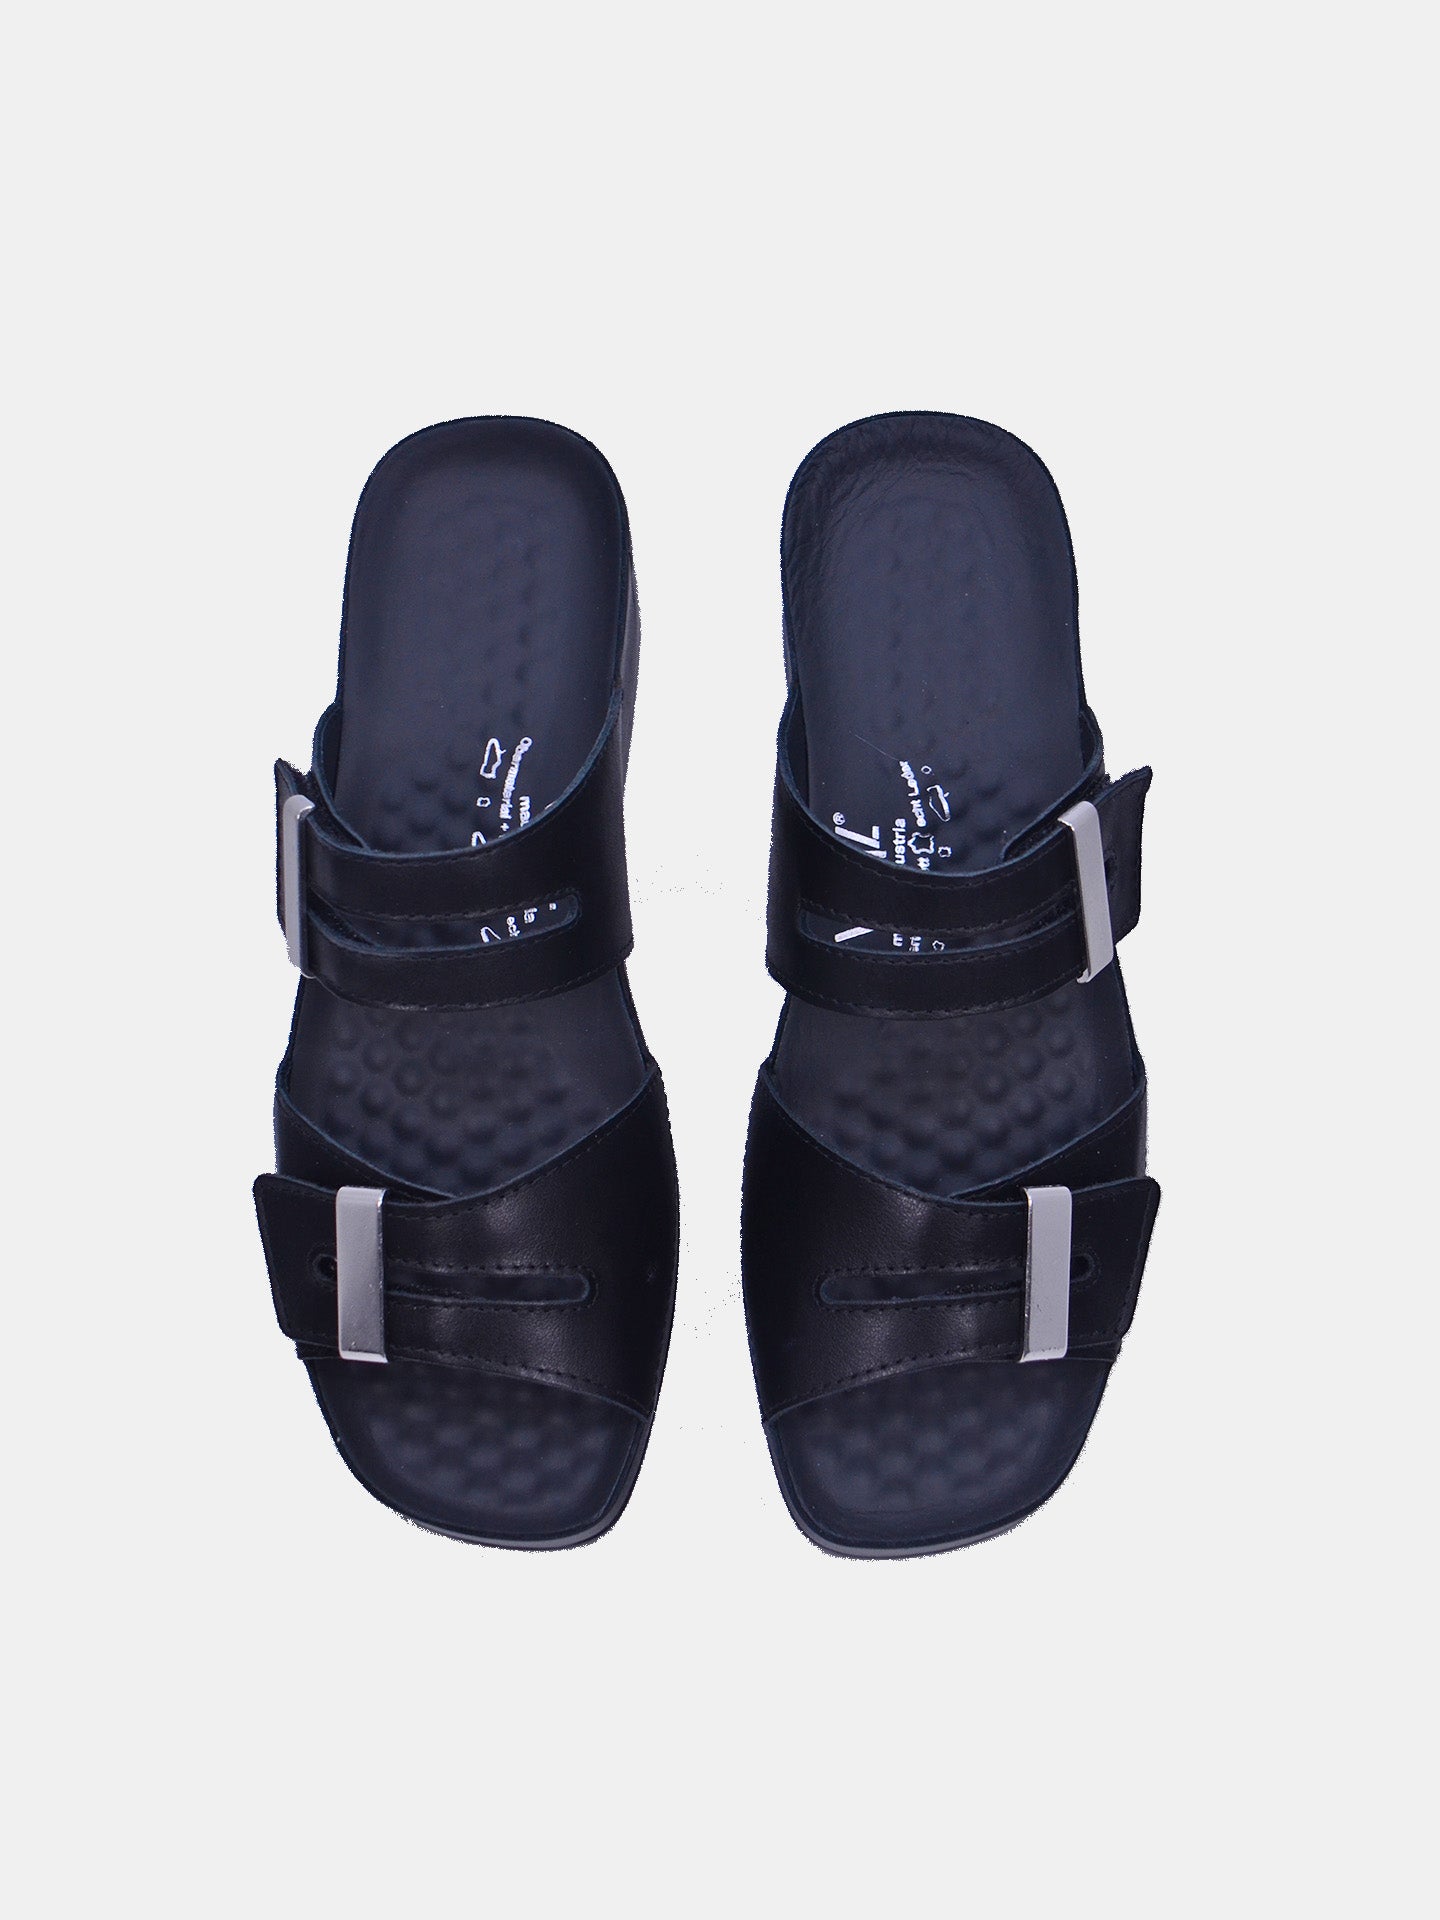 Vital 0836 Women's Heeled Sandals #color_Black